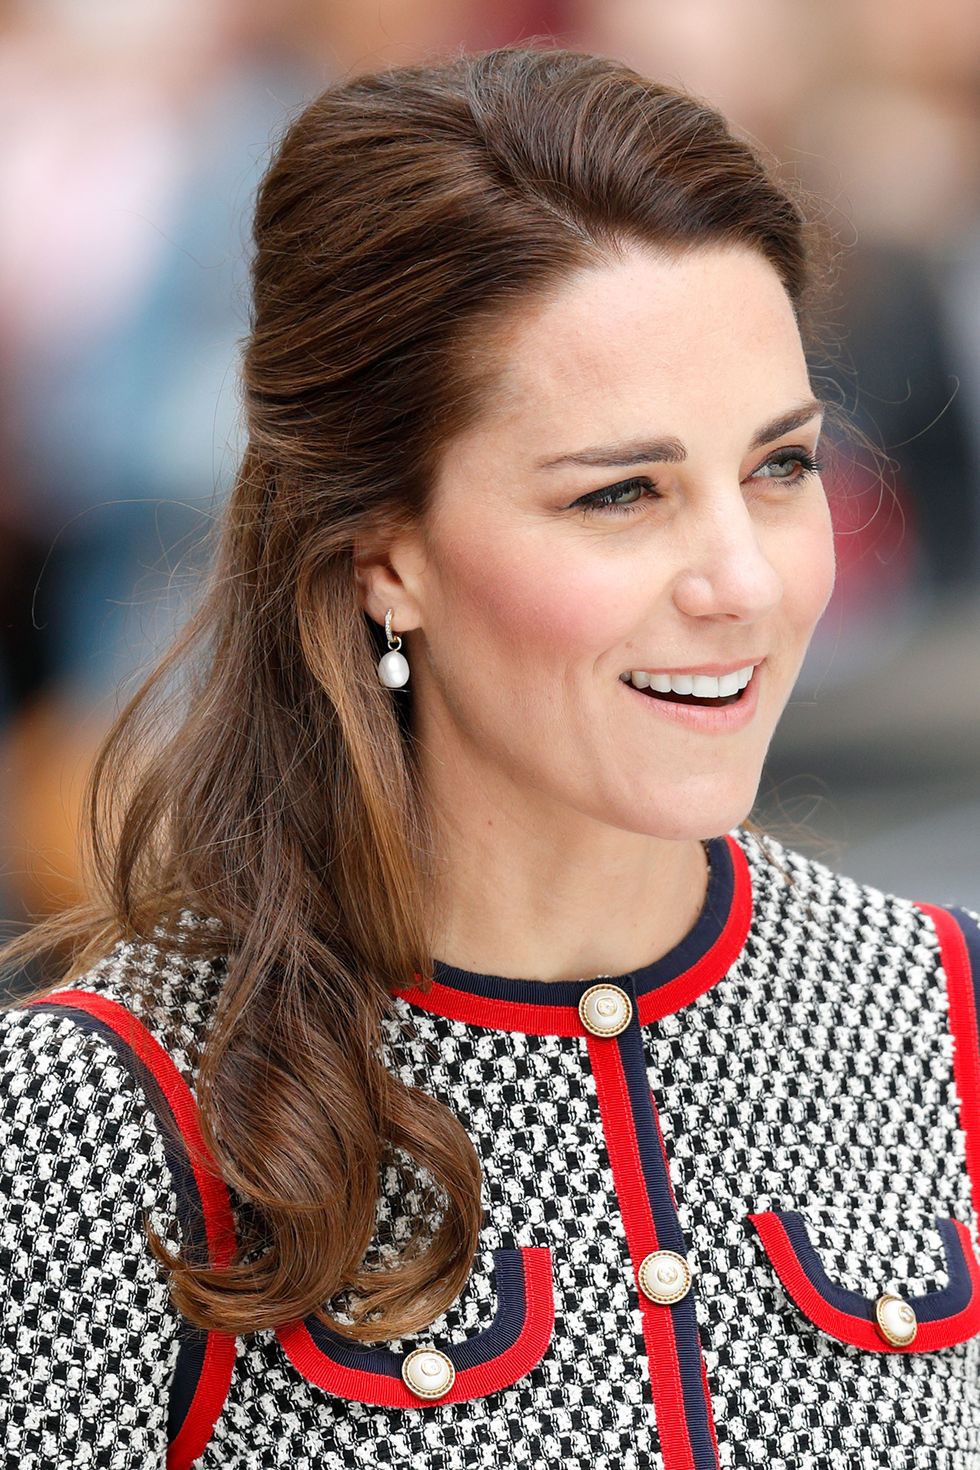 The Duchess of Cambridge's hair